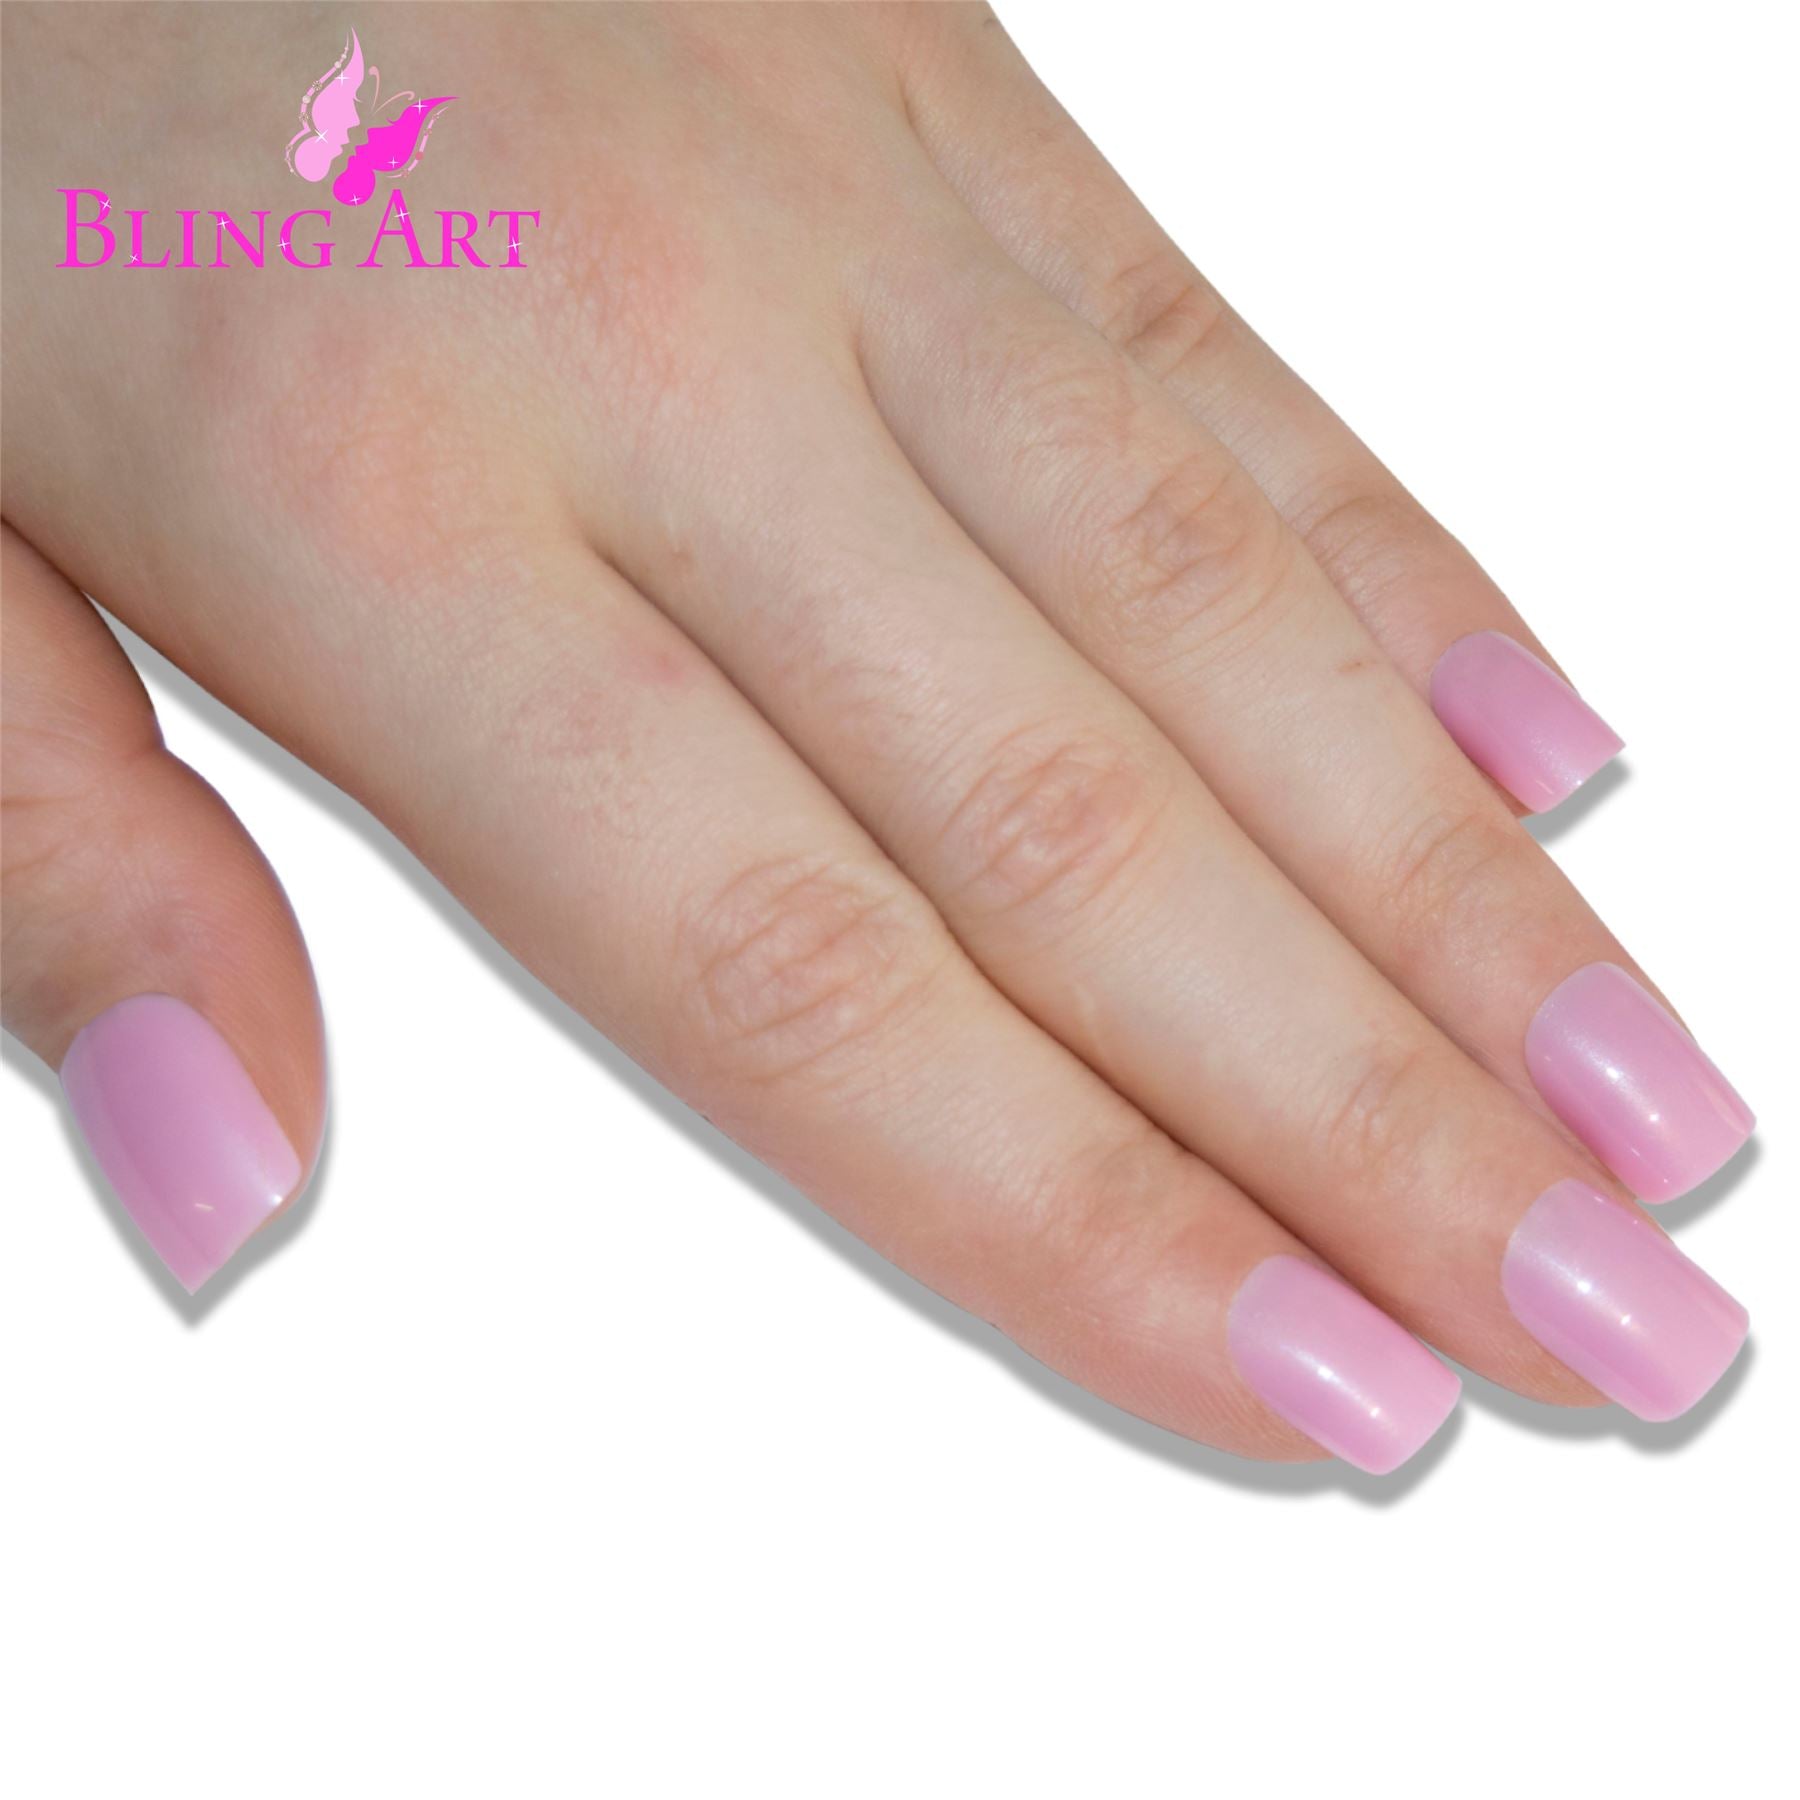 False Nails Bling Art Glitter Pink French Manicure Fake Medium Tips with Glue